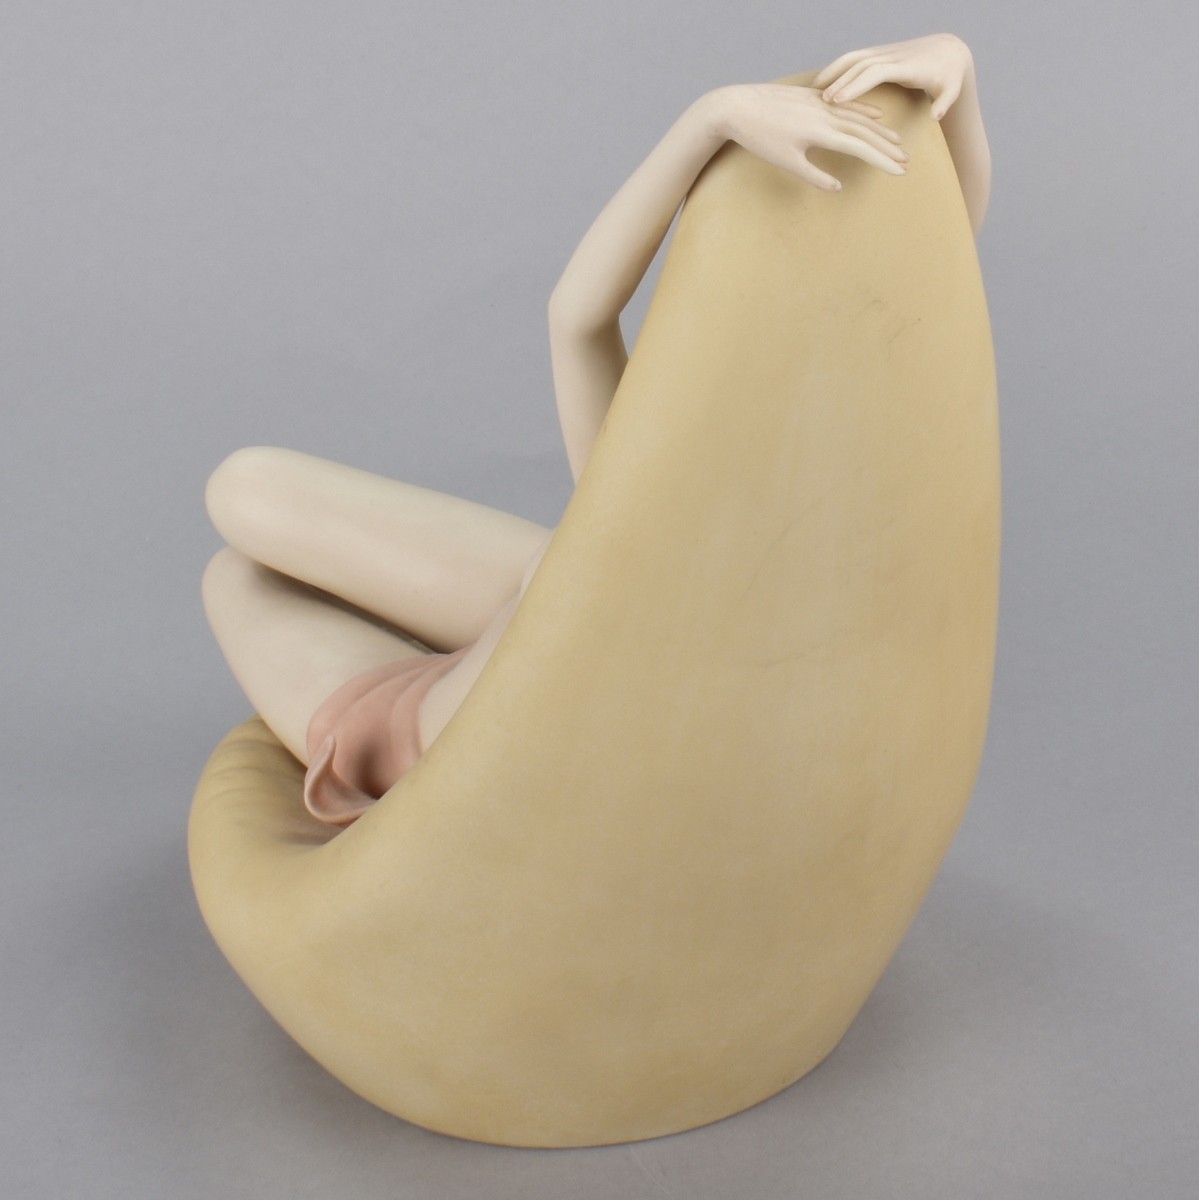 Laslo Ispanky "Evening" Nude Figurine